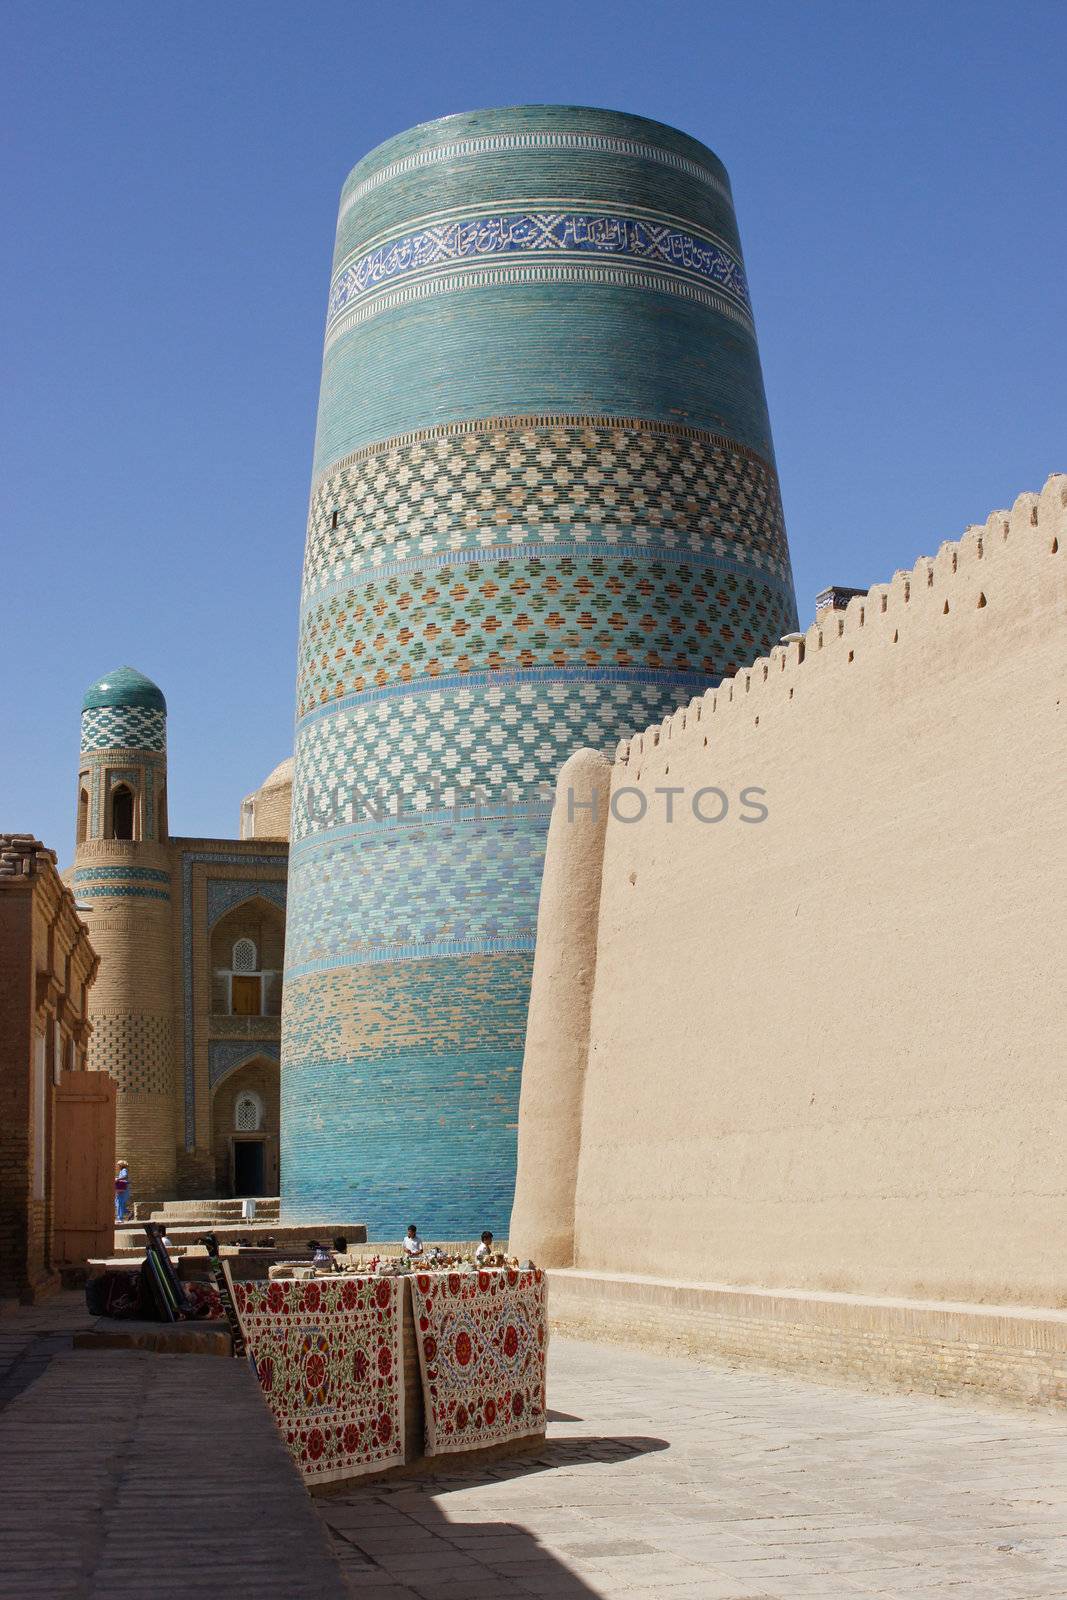 Kalta Minor, landmark of the ancient city of Khiva, silk road, Uzbekistan, Central Asia